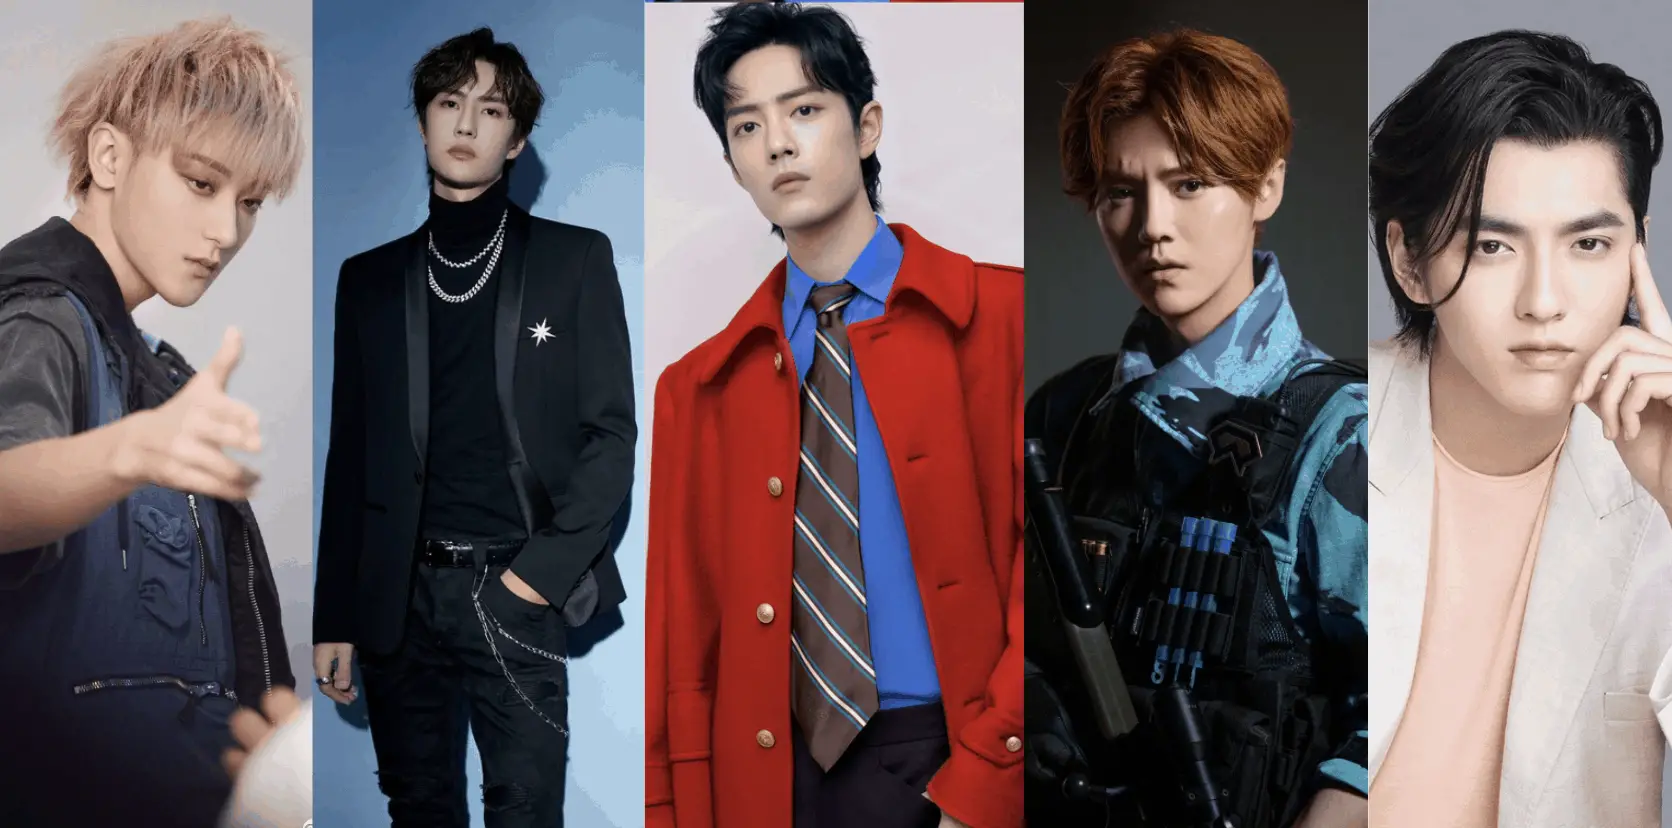 Xiao Zhan, Wang Yibo, Huang Zitao, Kris Wu, Luhan As TheTop 10 Up and Rising Male Chinese Idols Turned Actors You Won’t Want To Miss Out